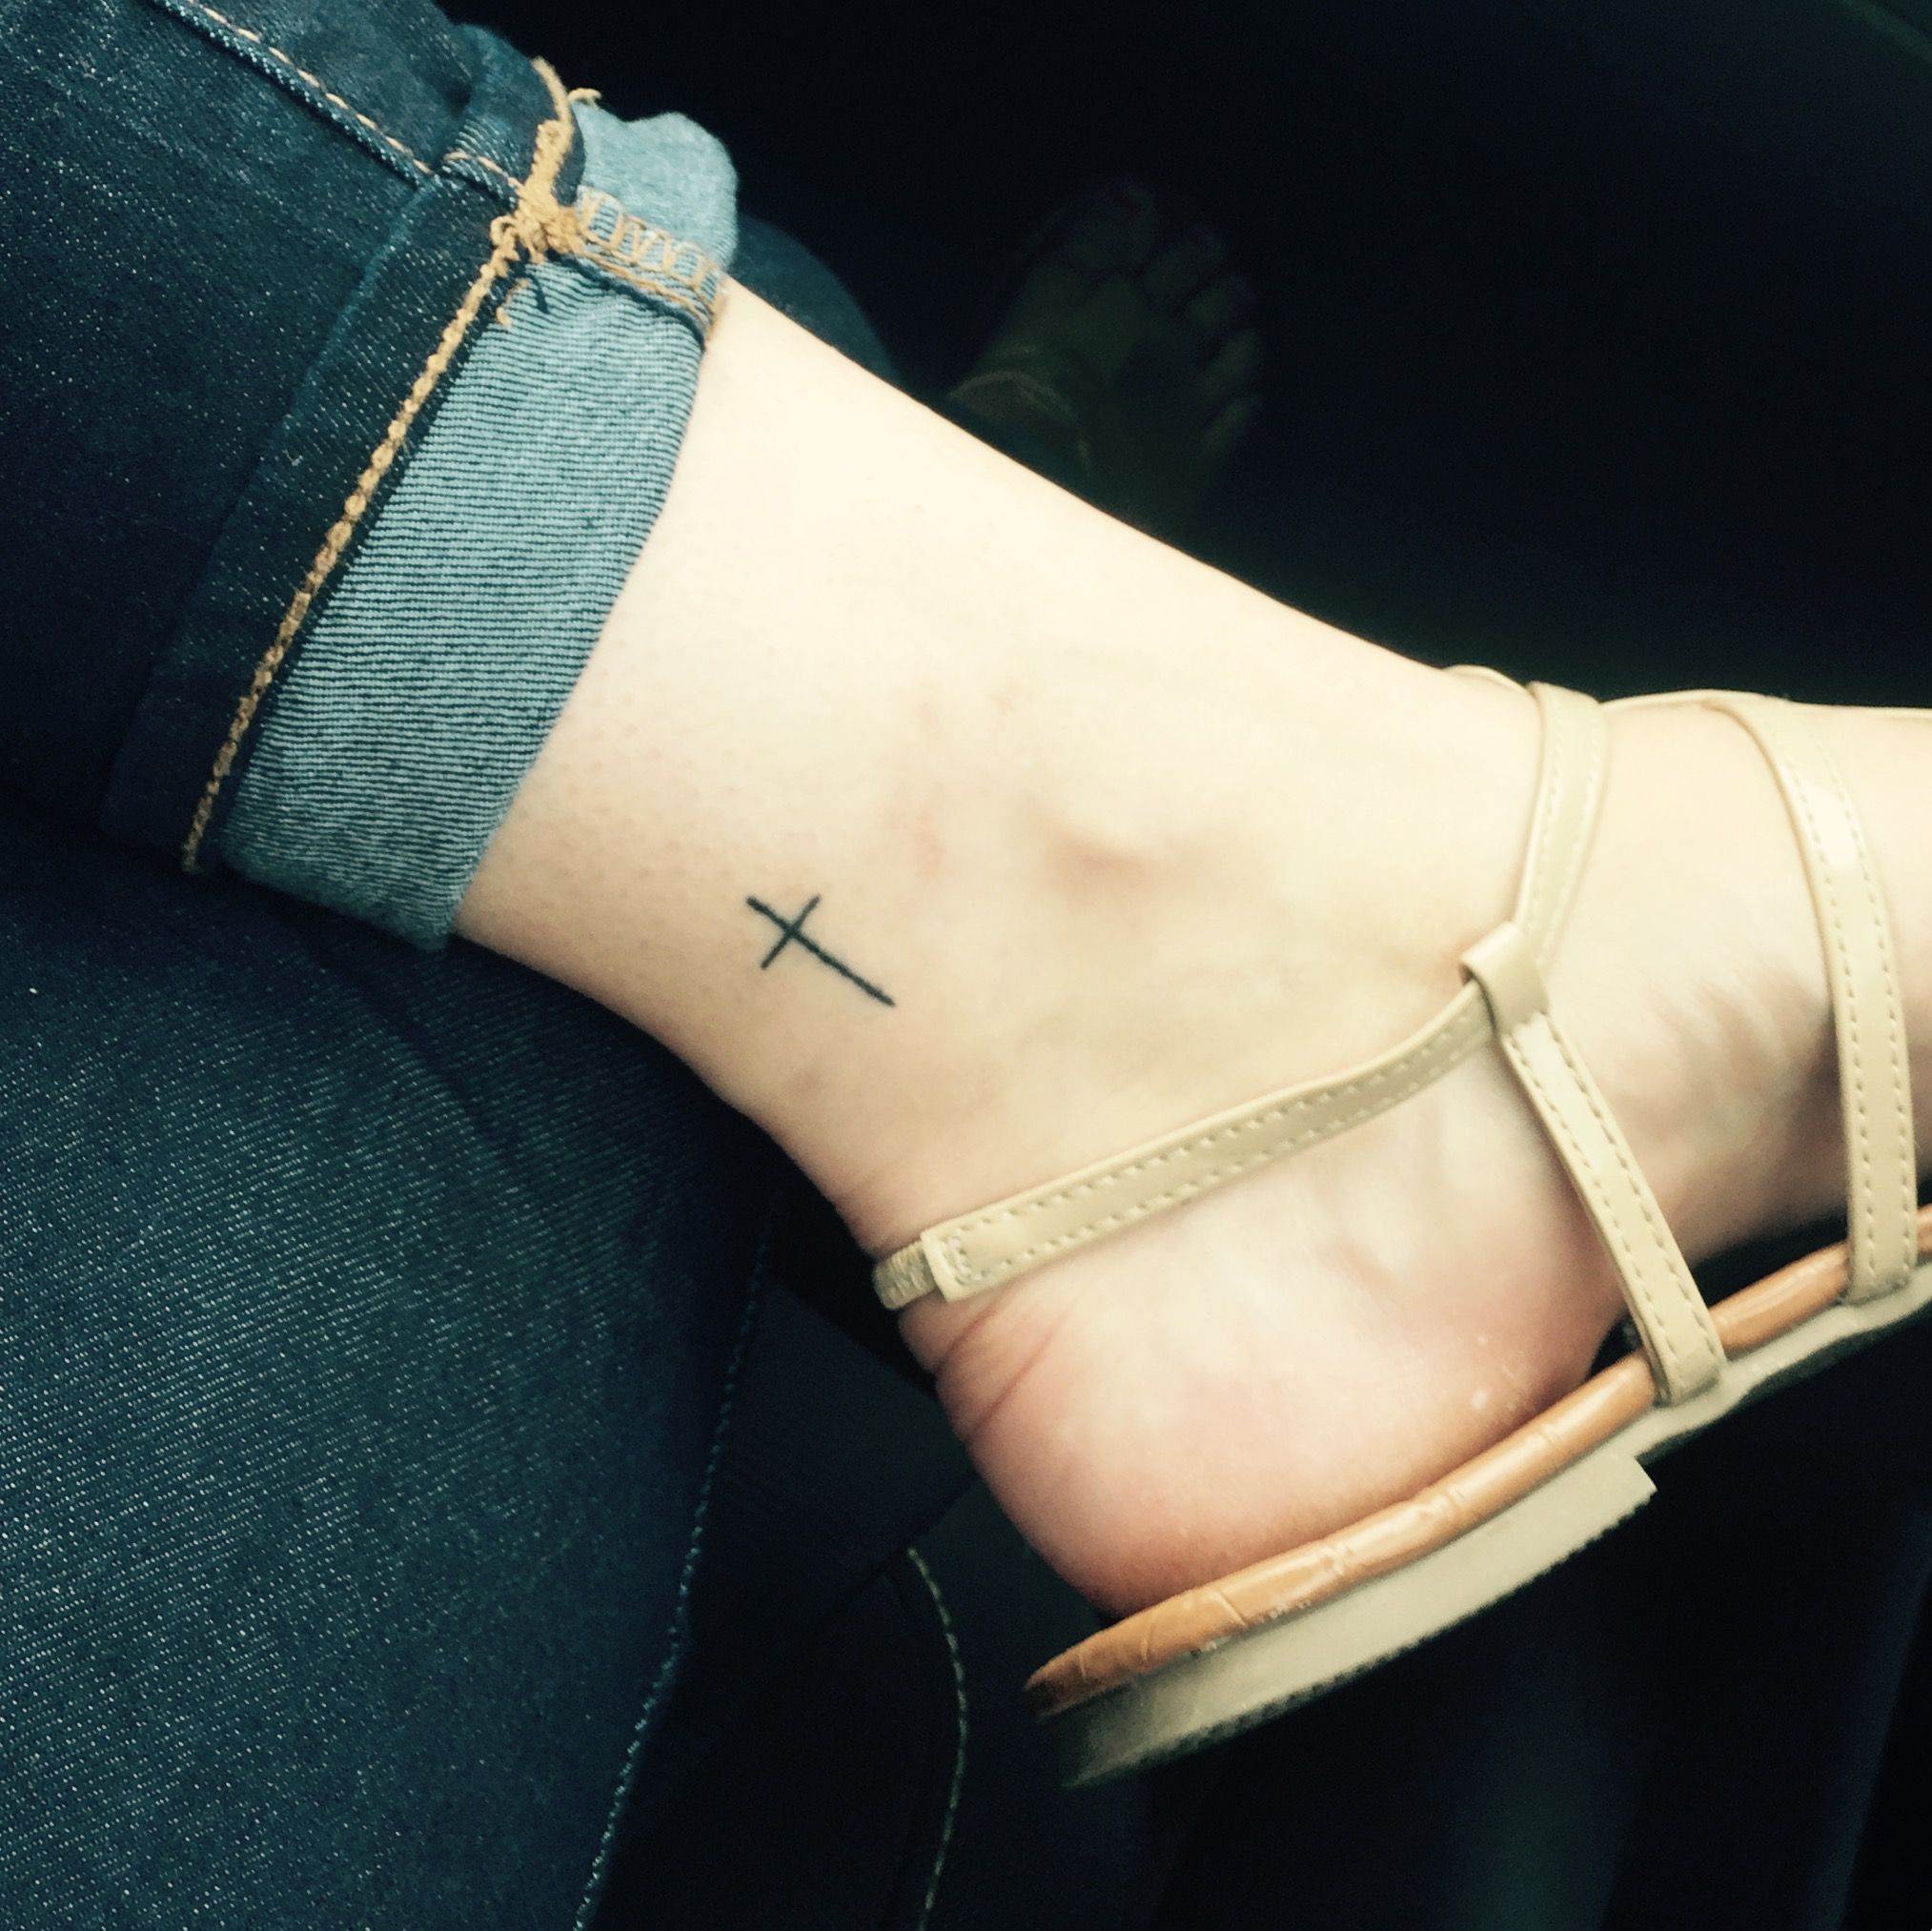 Cross Tattoo On Ankle